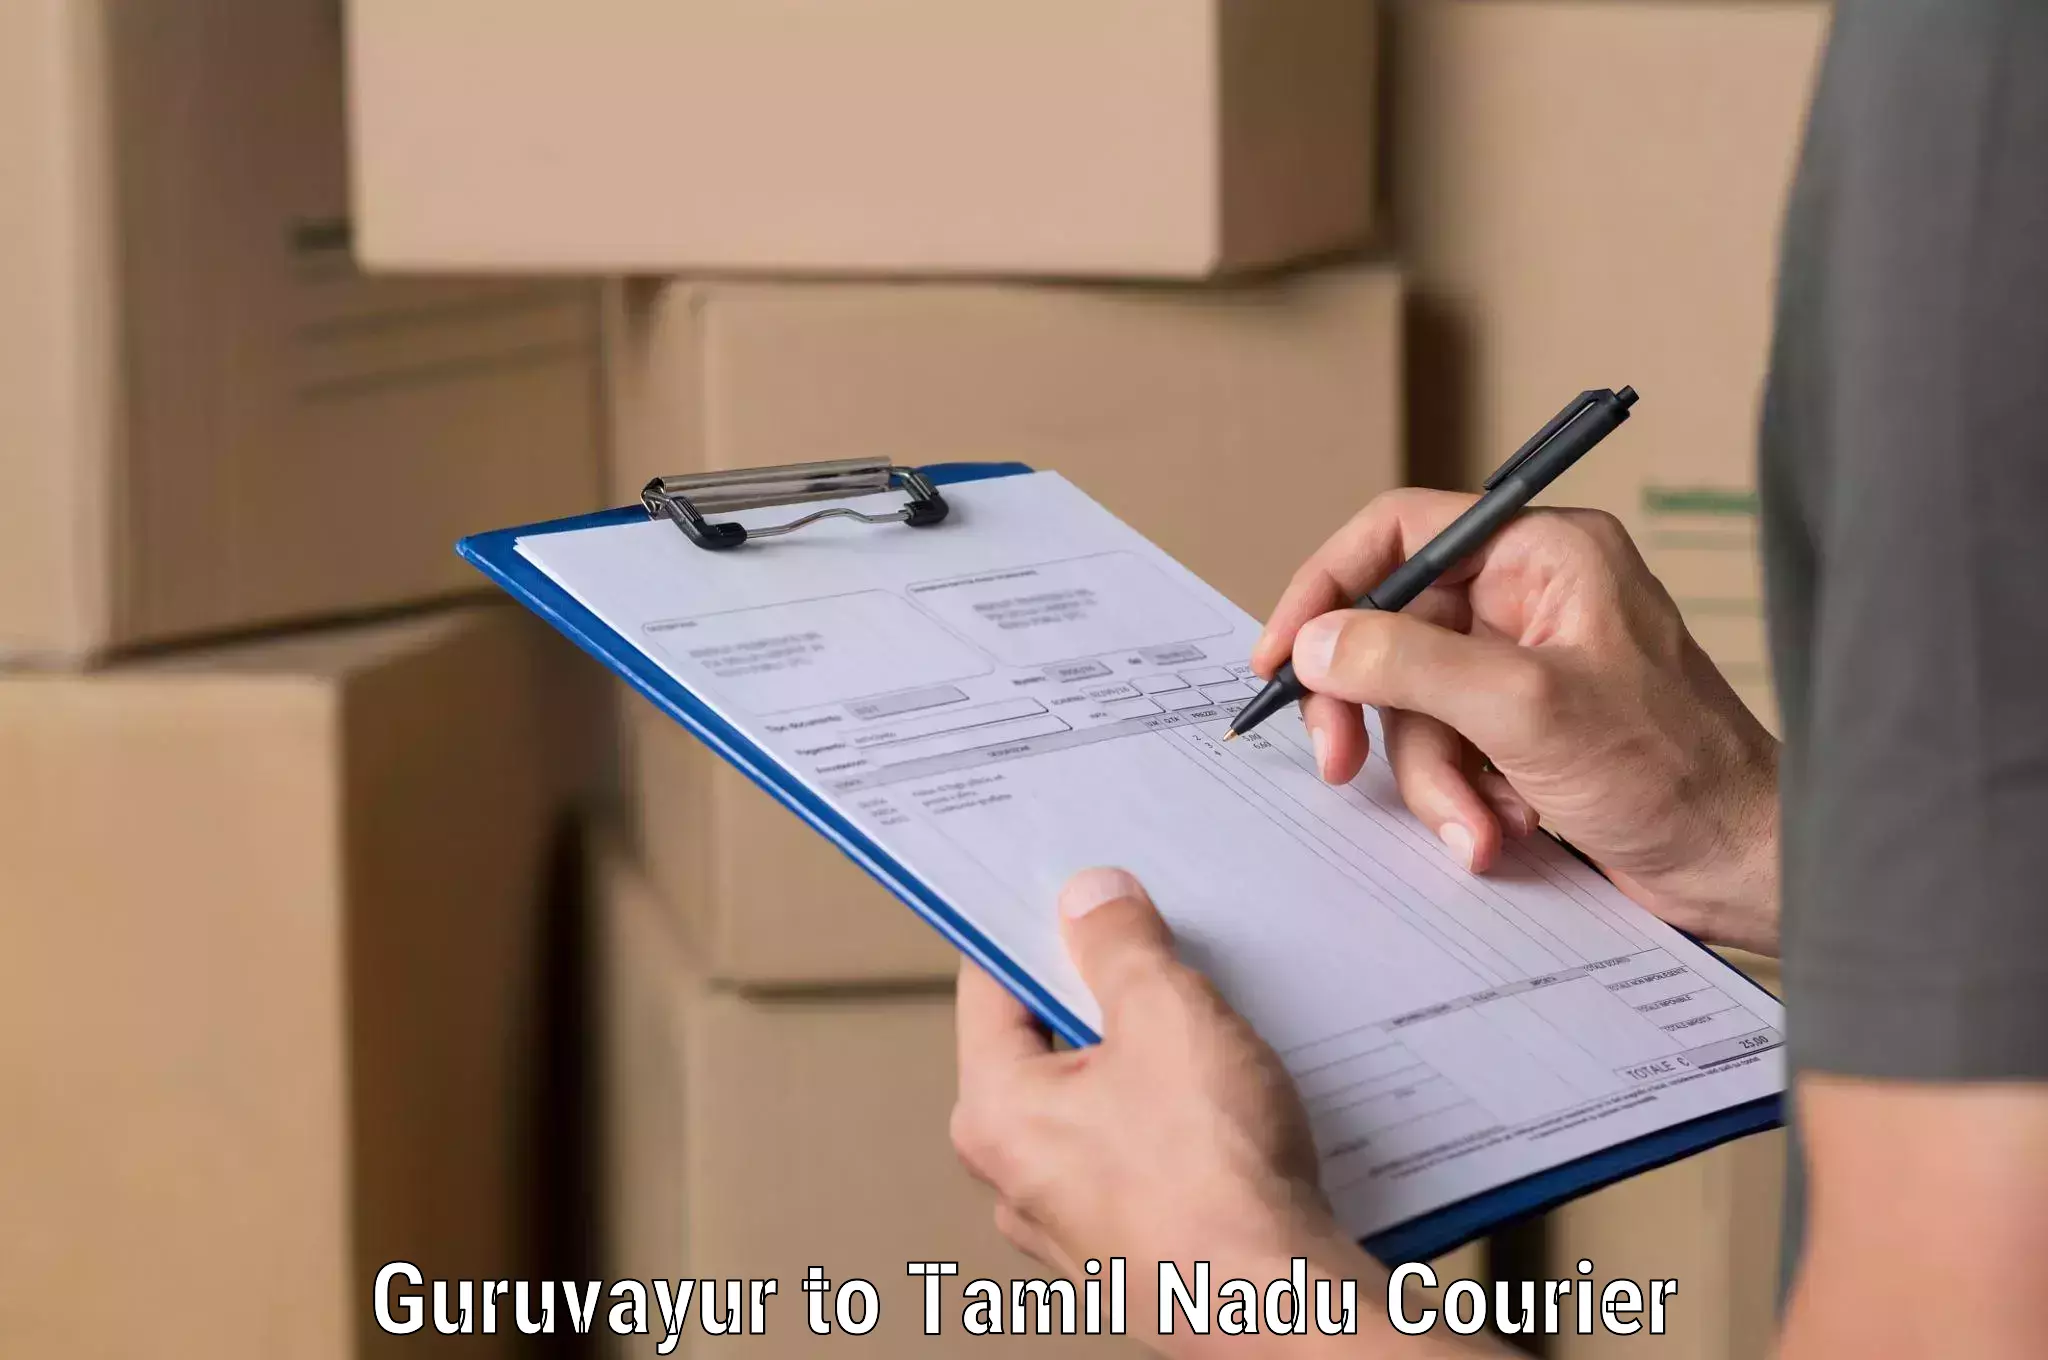 User-friendly delivery service Guruvayur to Sholinghur